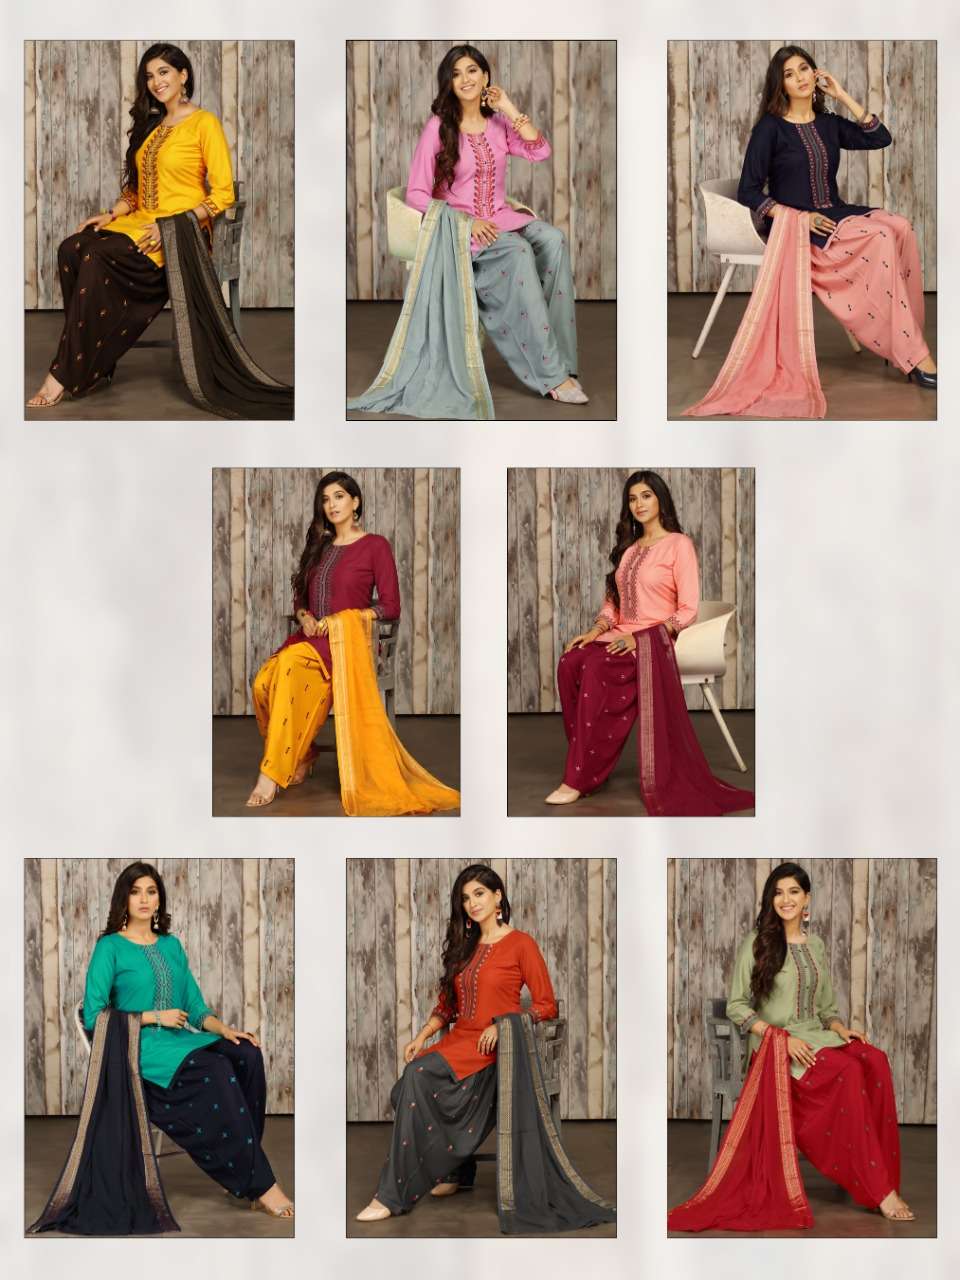 Buy I Lychee Swastik Online Wholesale Designer Patiyala Salwar Suit